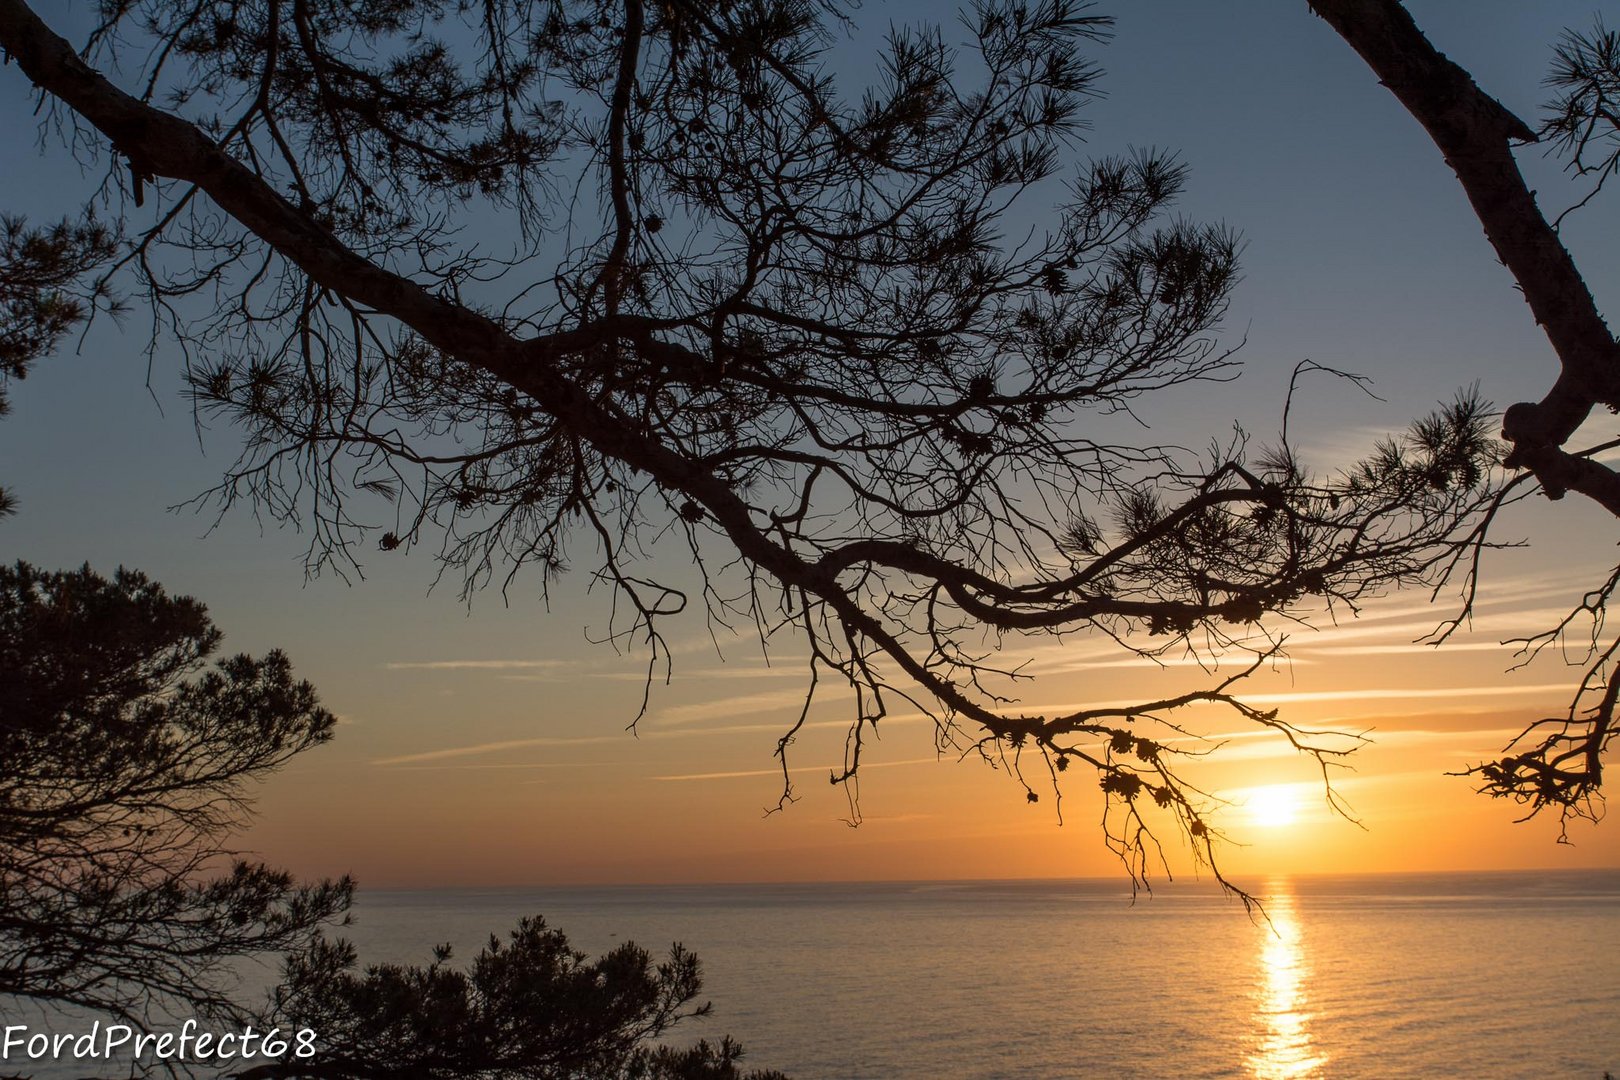 Sonnenuntergang Mallorca